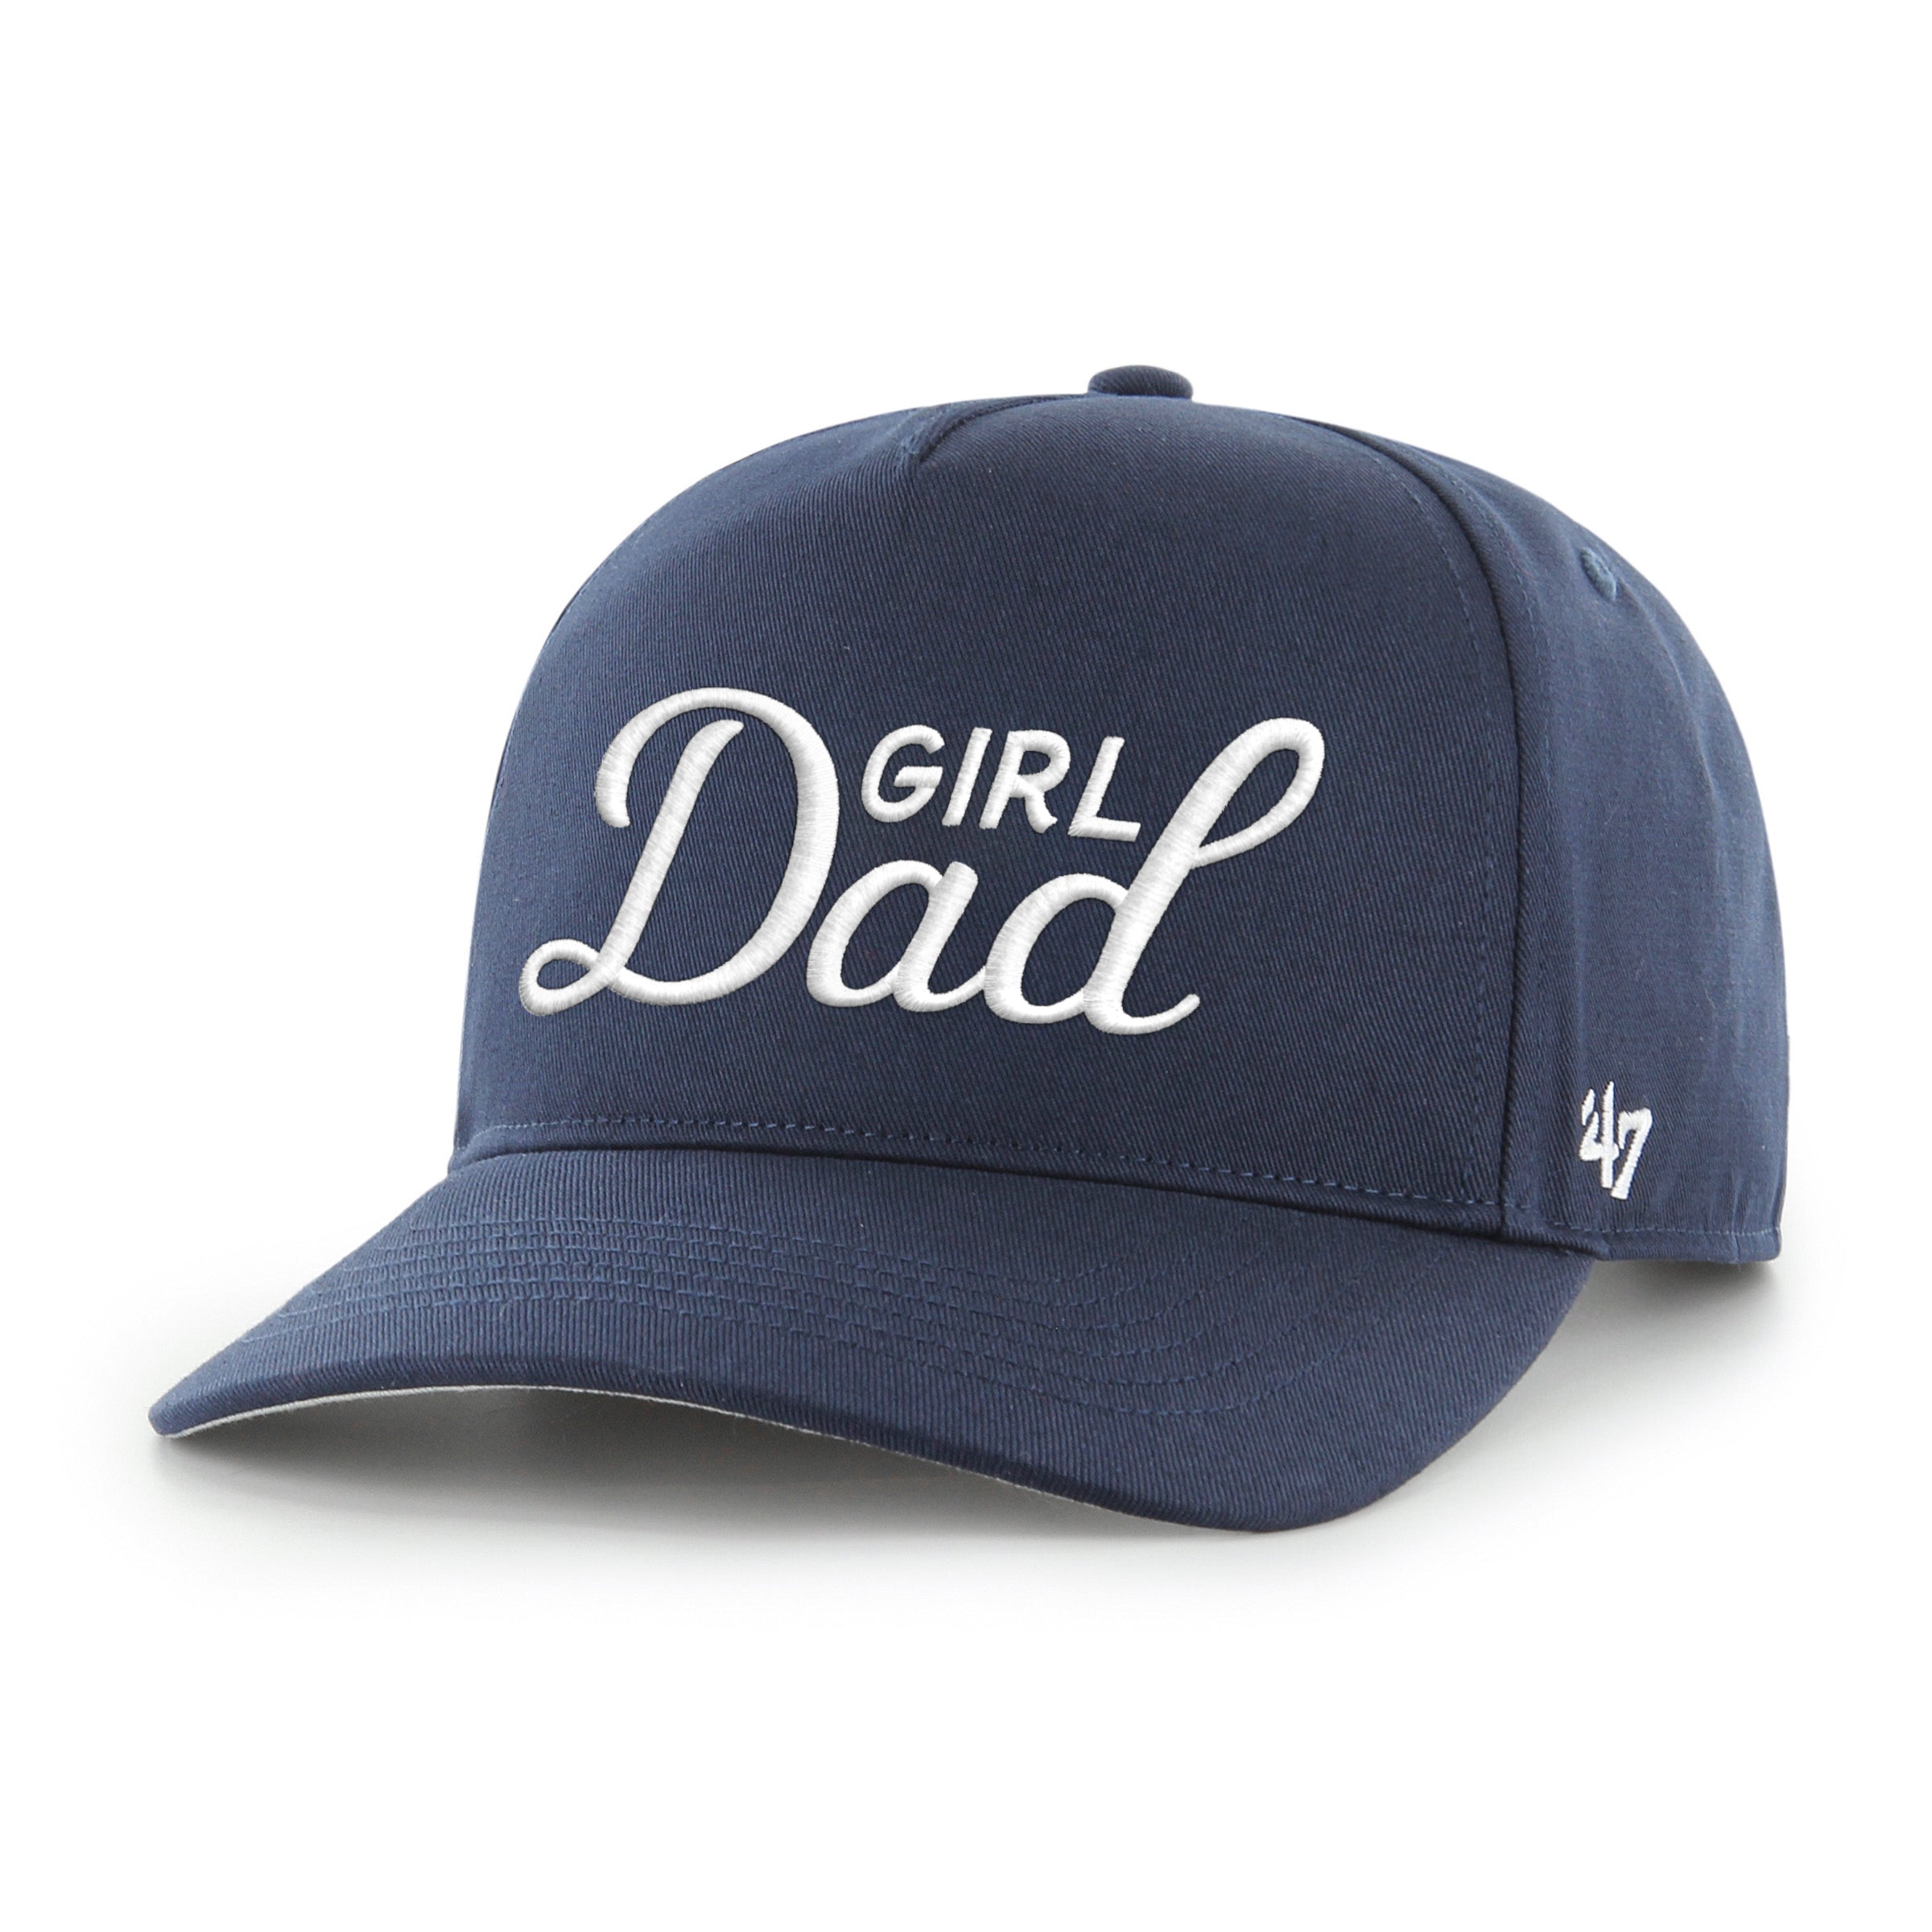 Girl Dad '47 HITCH Snapback Hat